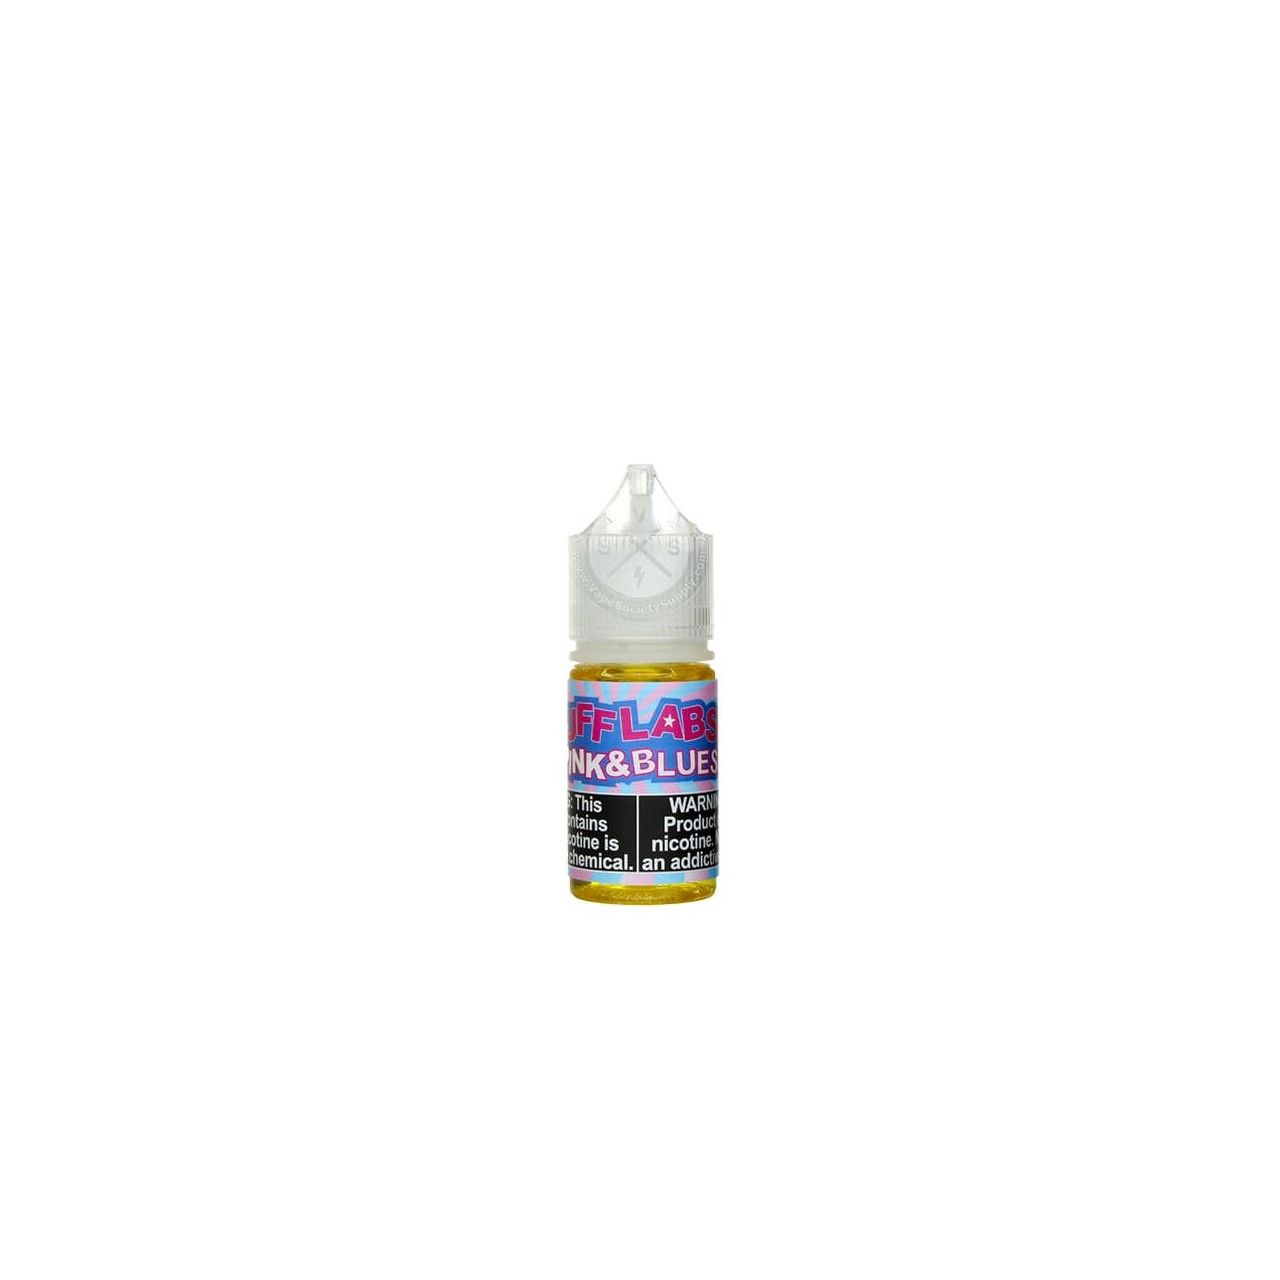 Líquido (Juice) - Nic Salt - Puff Labs - Pink and Blues Puff Labs E-Liquid - 1